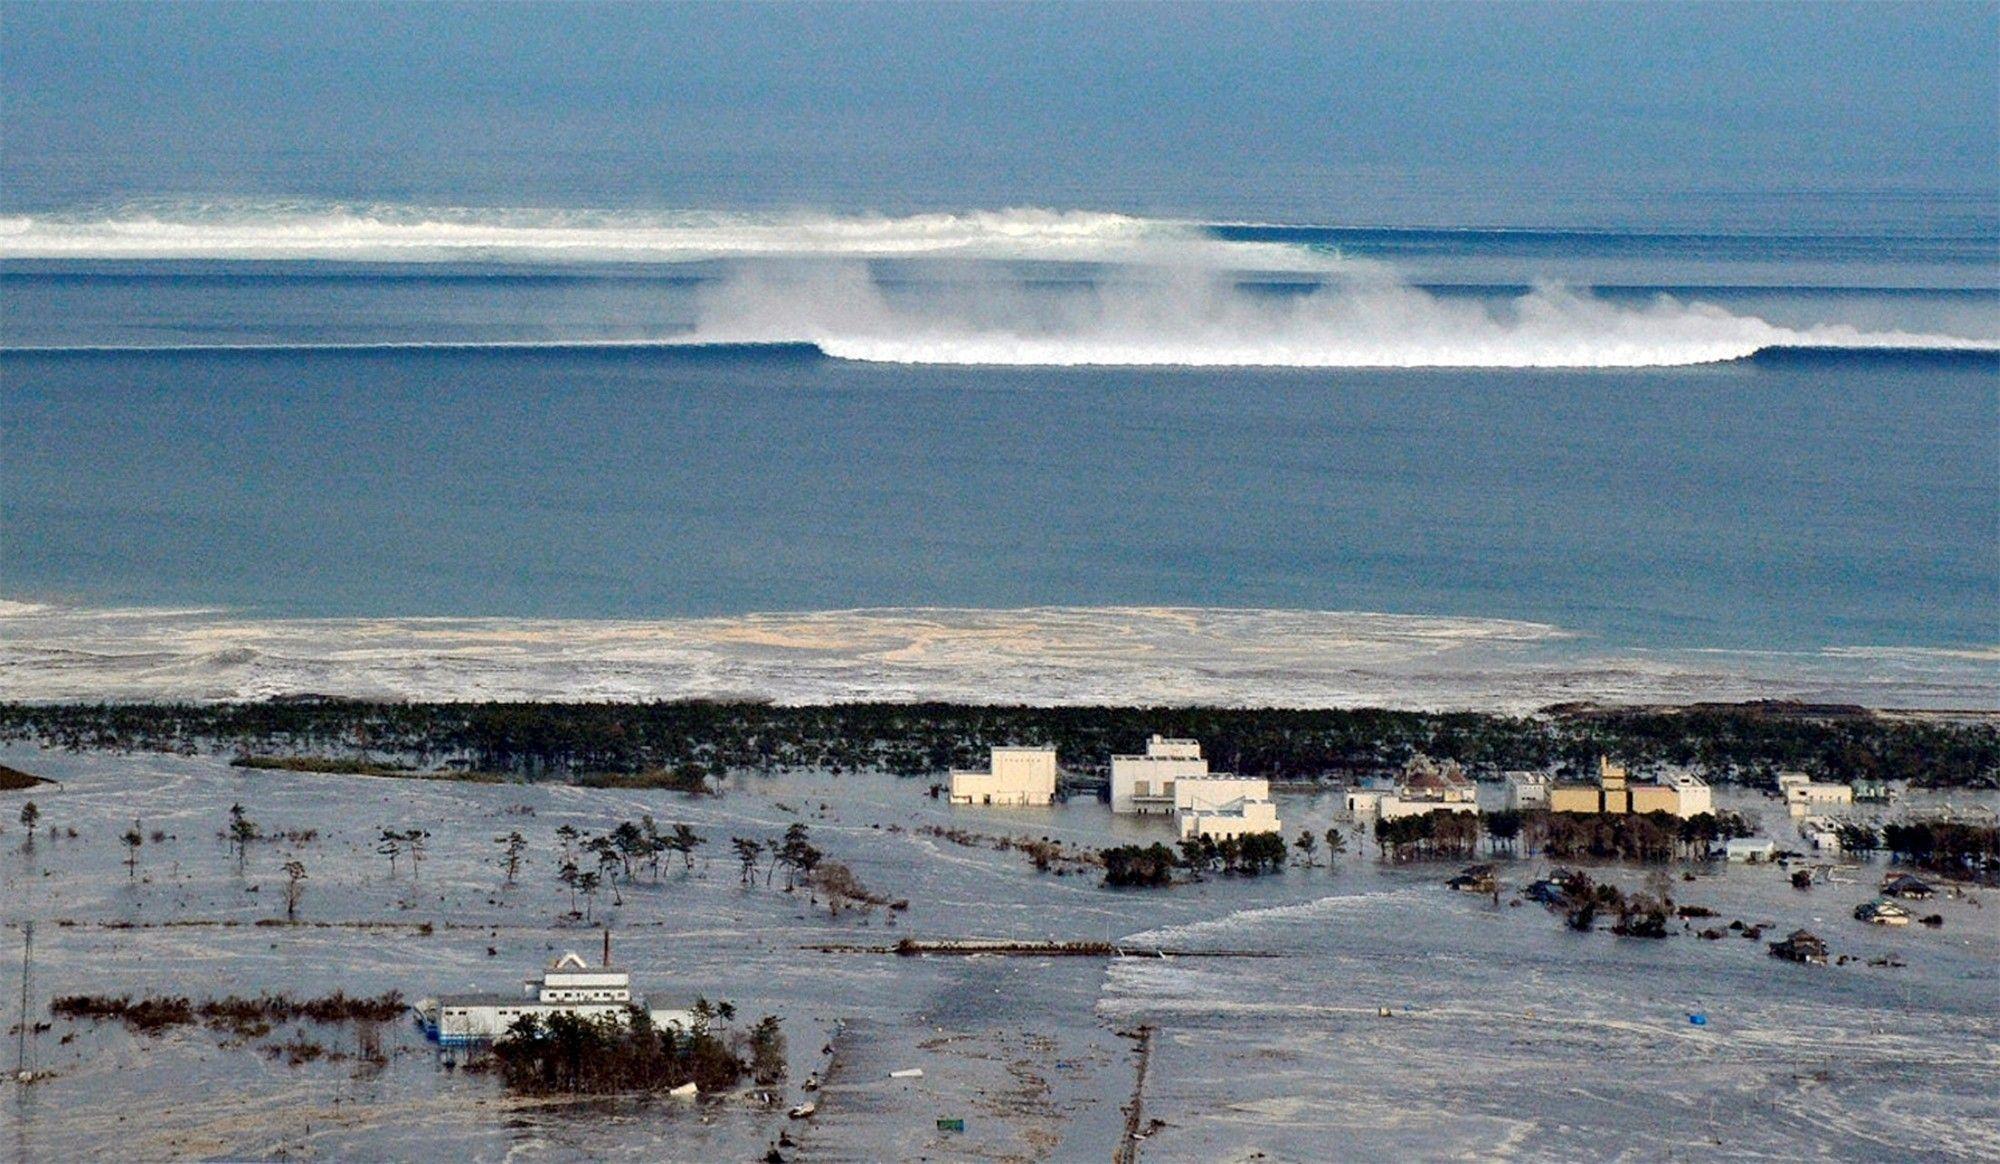 Natural Force: Tsunami Big Wave Waves Giant Japan Earthquake Image